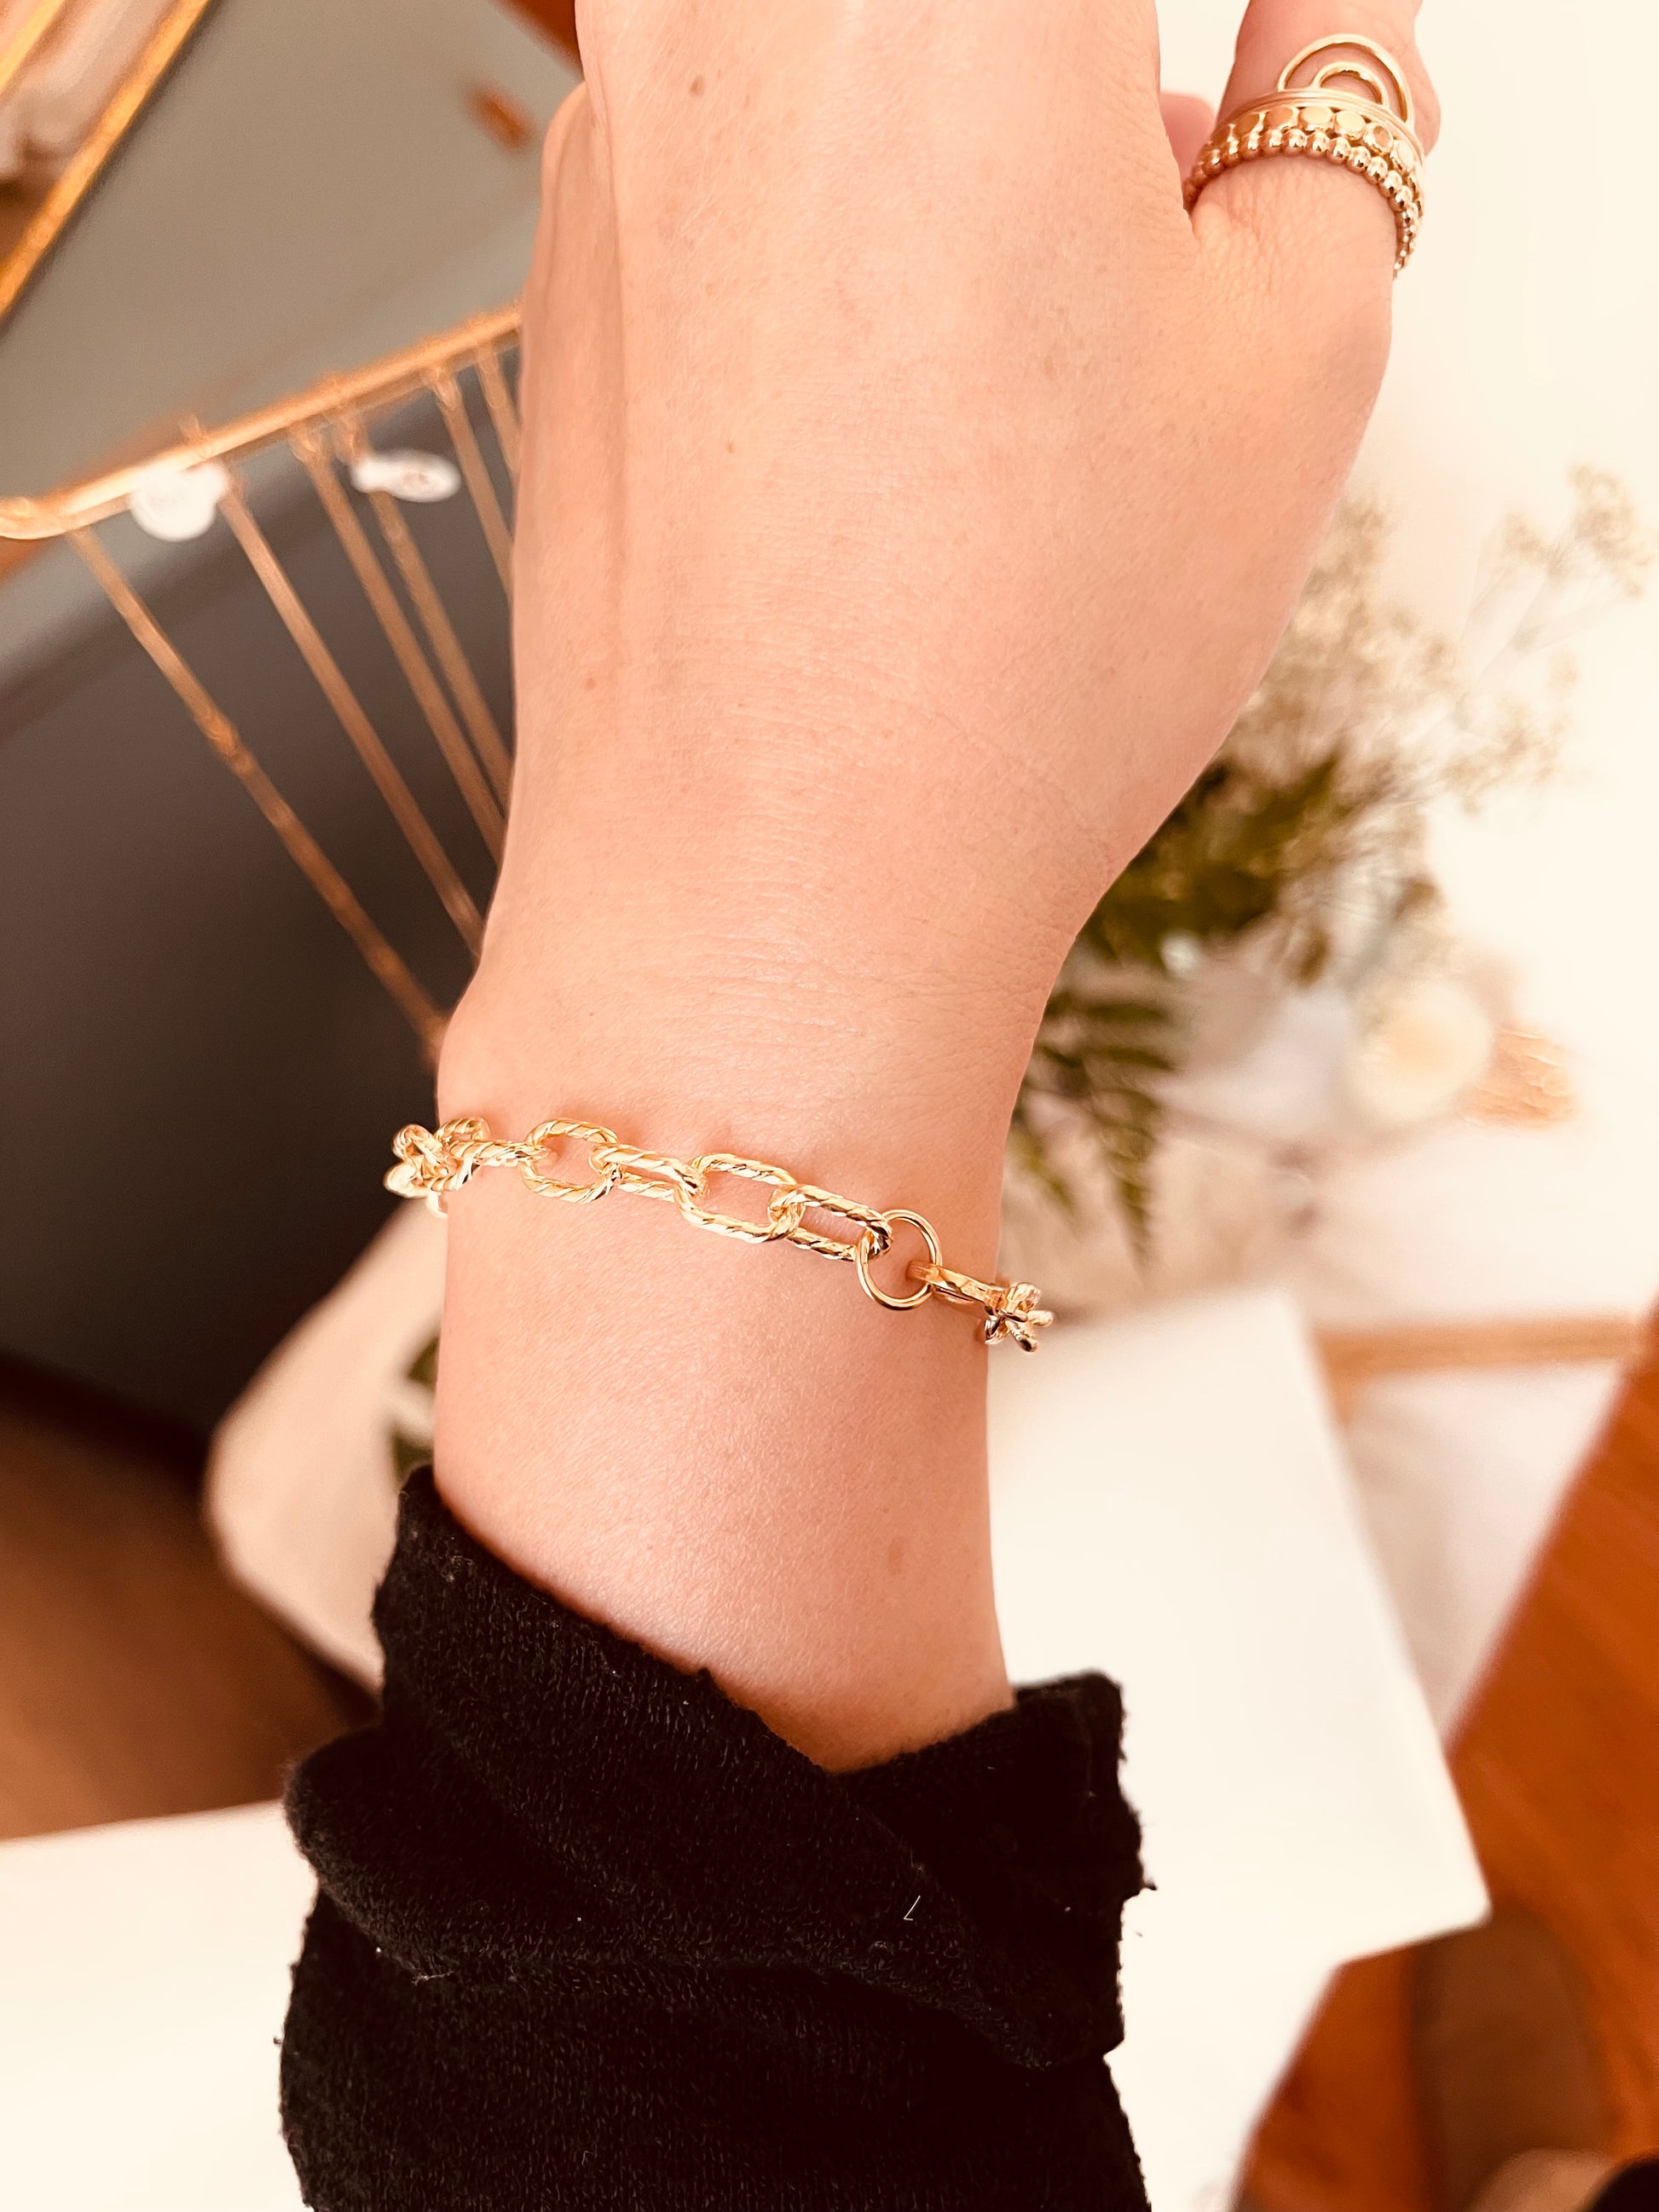 Chain Bracelet, Twisted Link Chain Bracelet, 14K Gold Filled Thick Bracelet, Statement Bracelet, Statement Jewelry, Mother’s Day Gifts